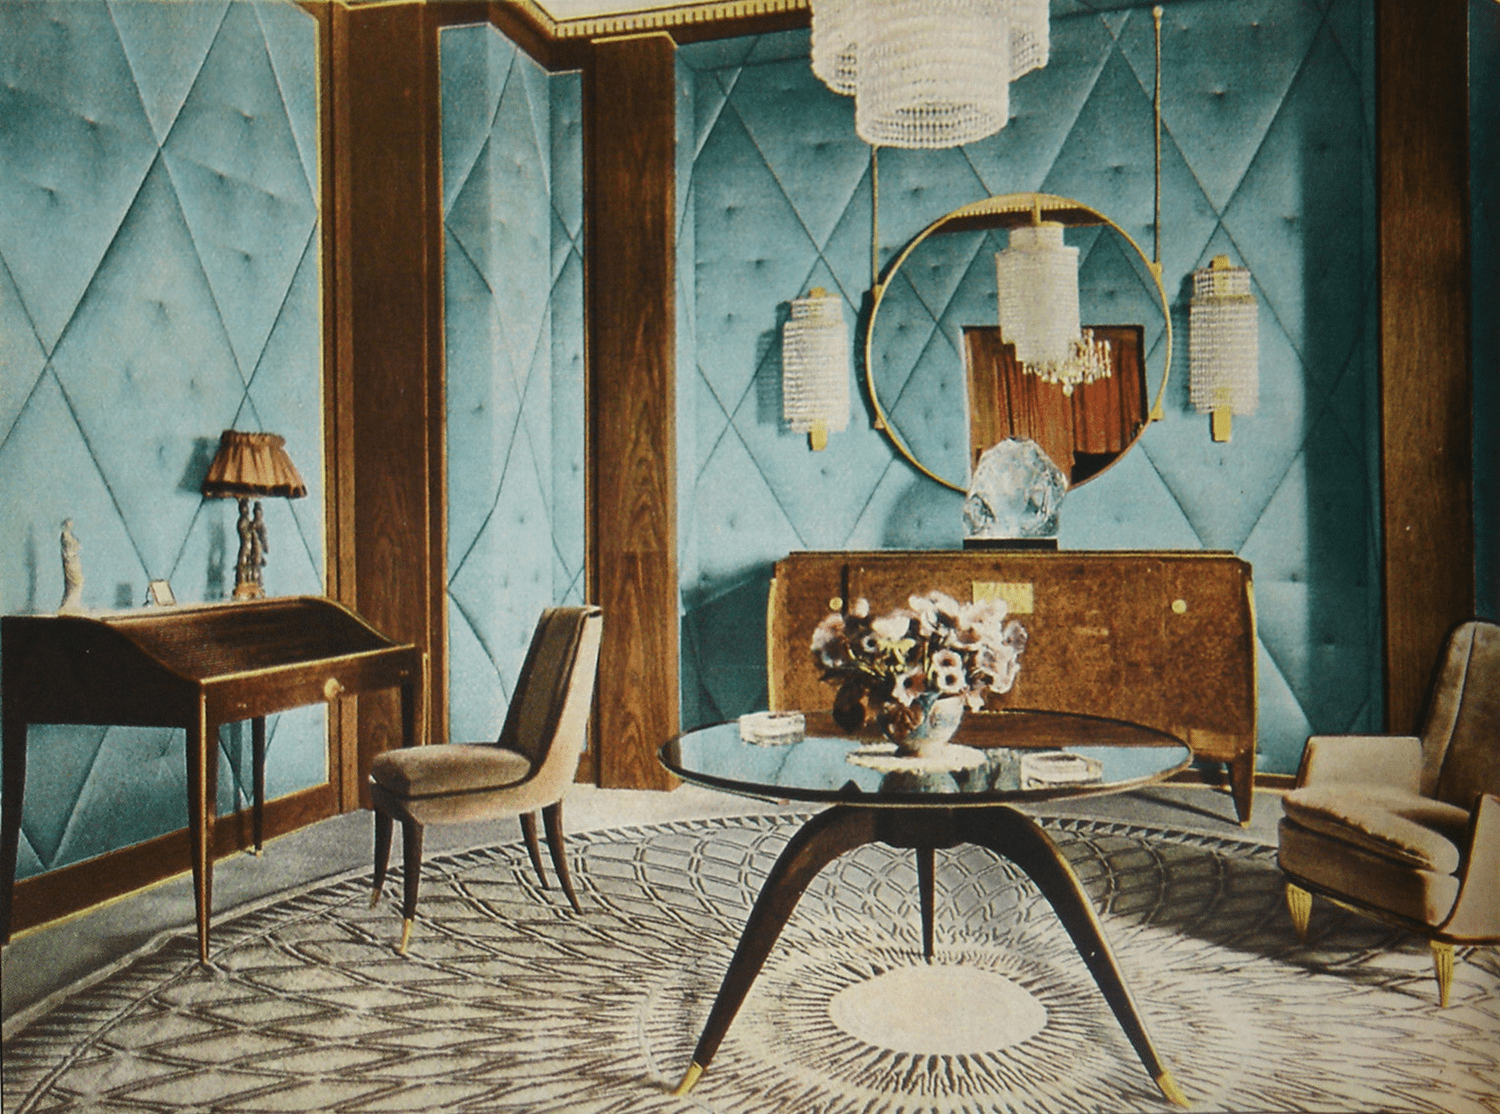 History of Design Blog Series - Art Deco | Floorscapes